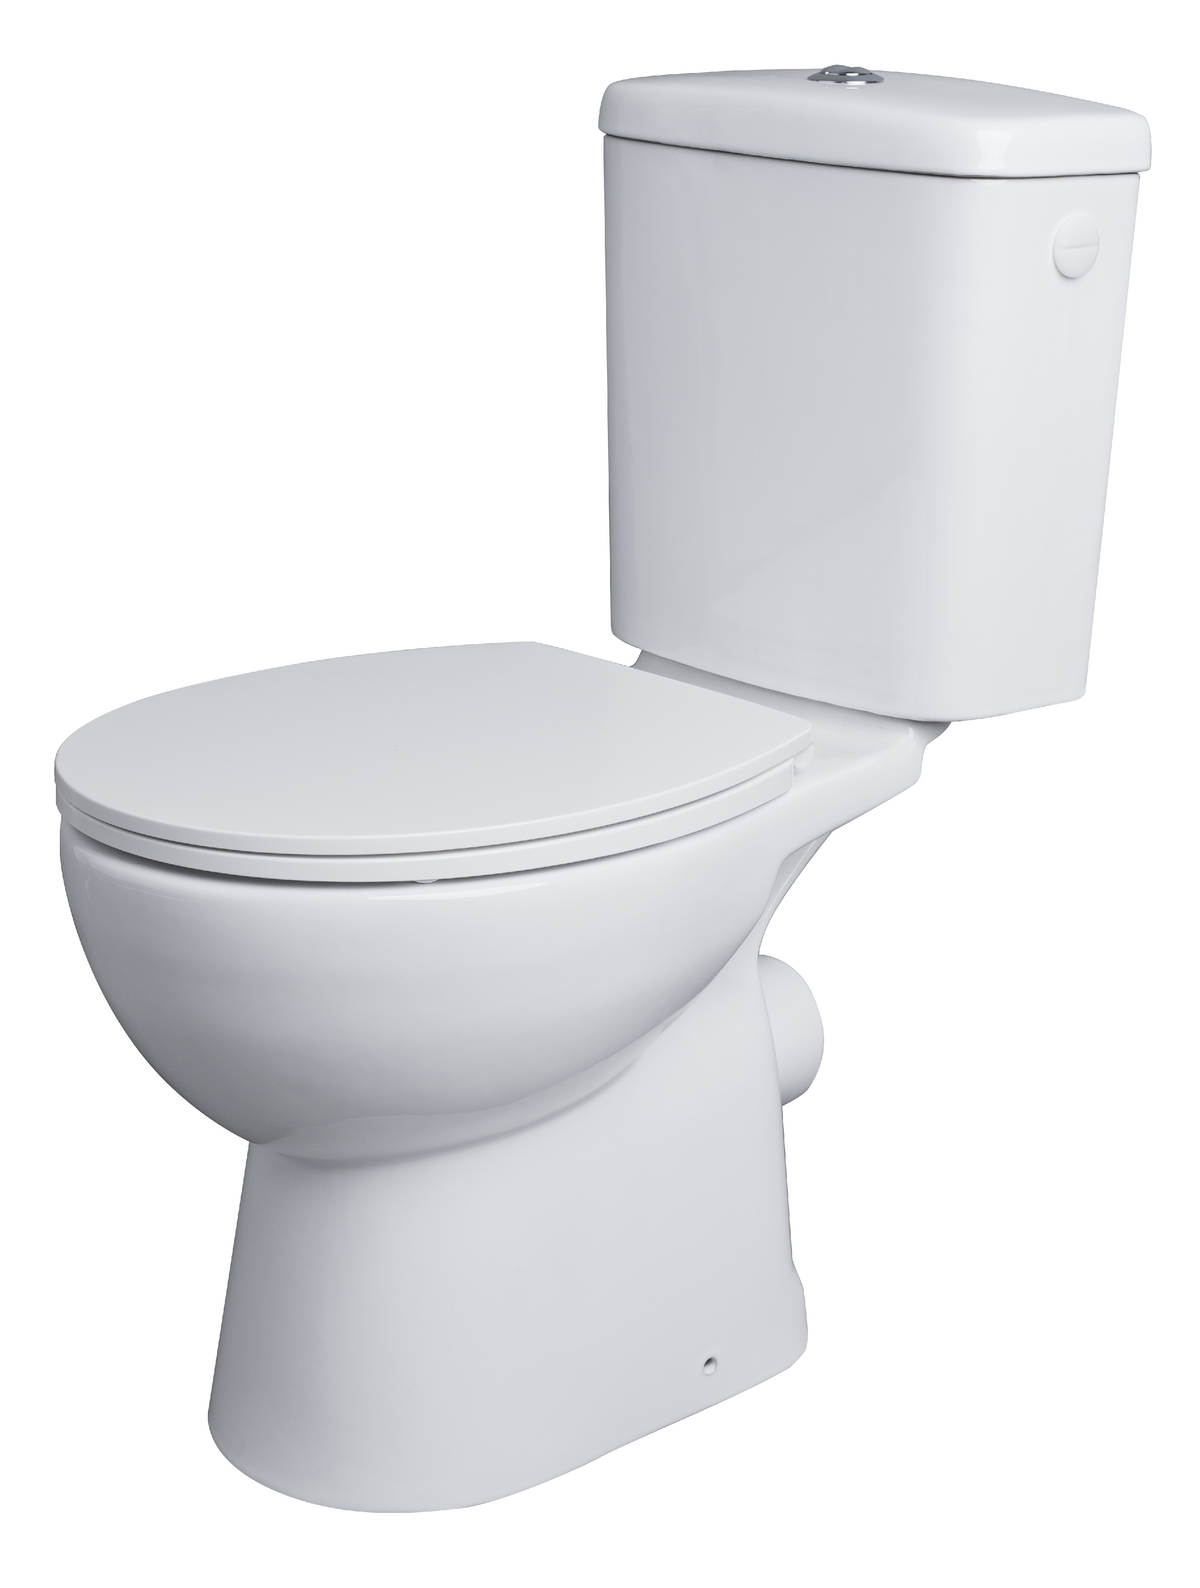 Aquavive duoblok toilet Avisio I PK aansluiting I Randloos toiletpot wit